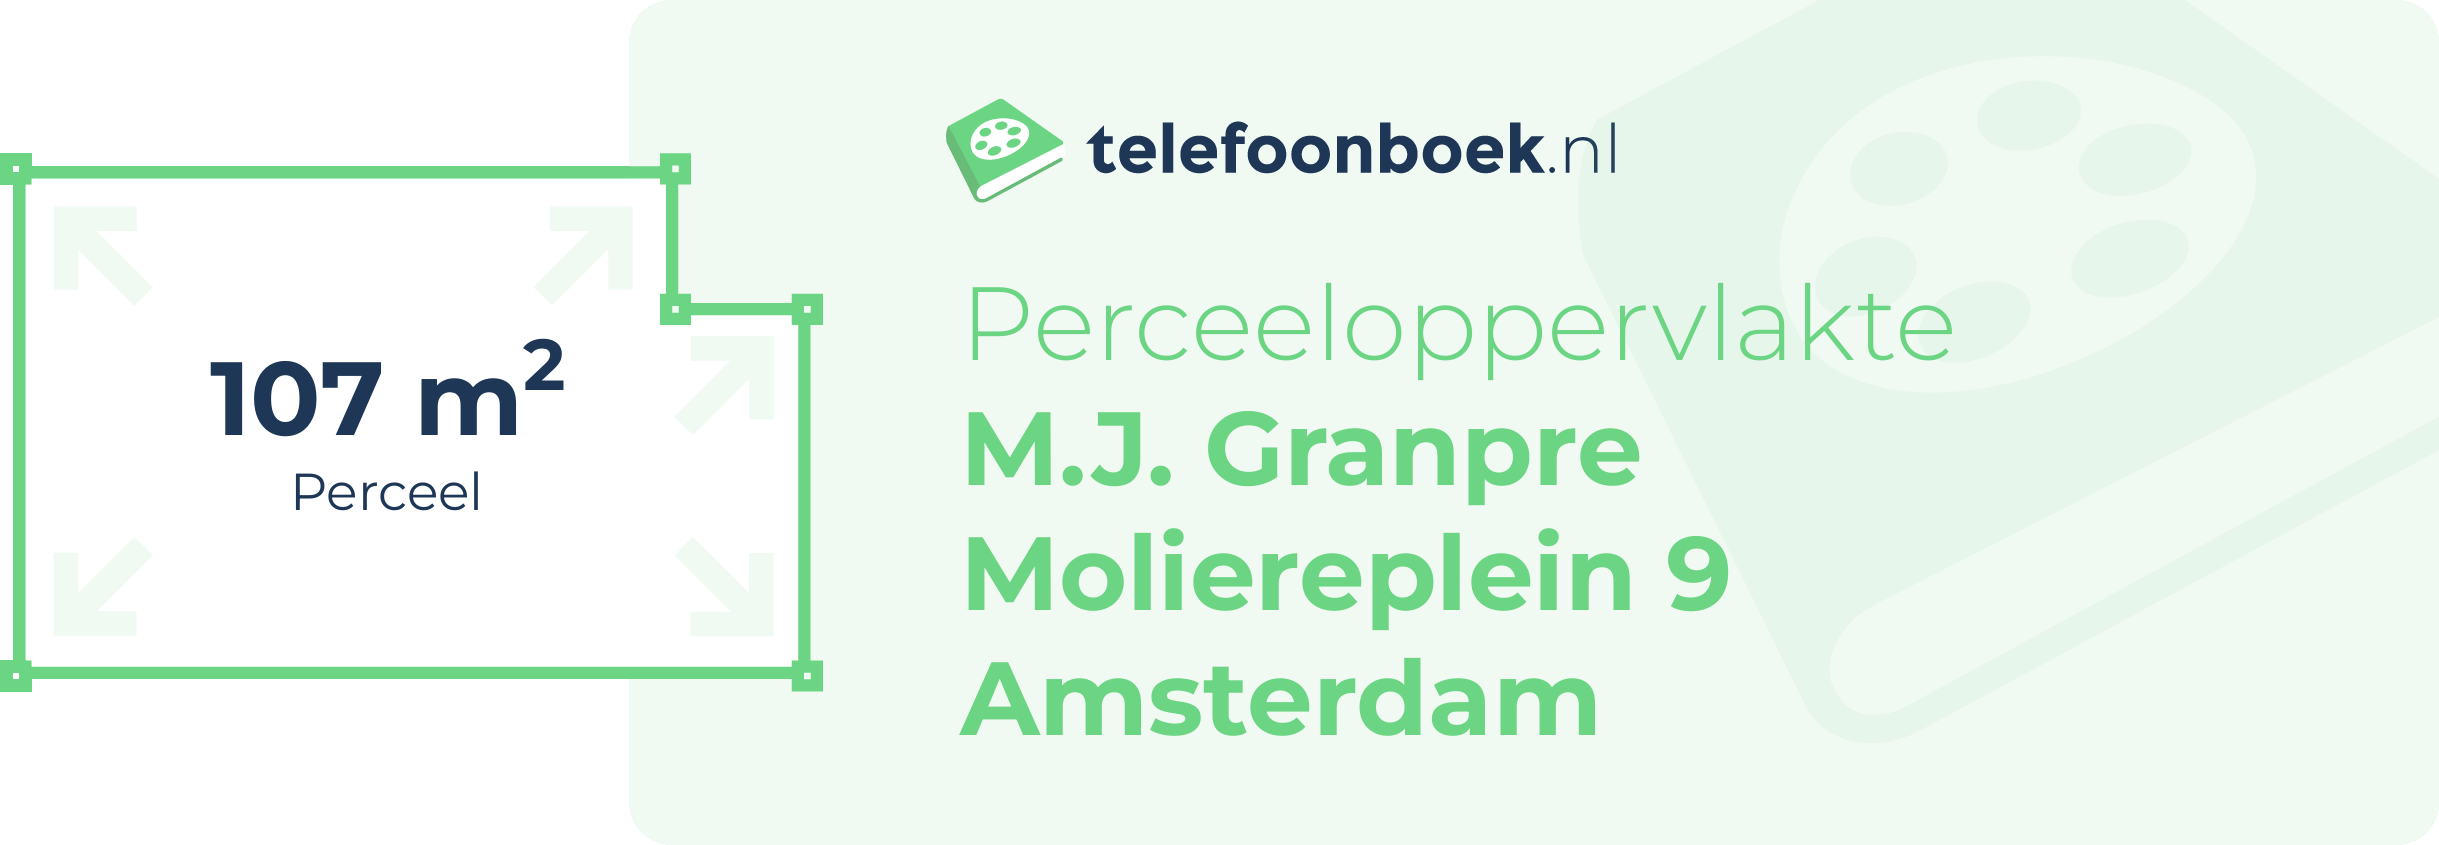 Perceeloppervlakte M.J. Granpre Moliereplein 9 Amsterdam